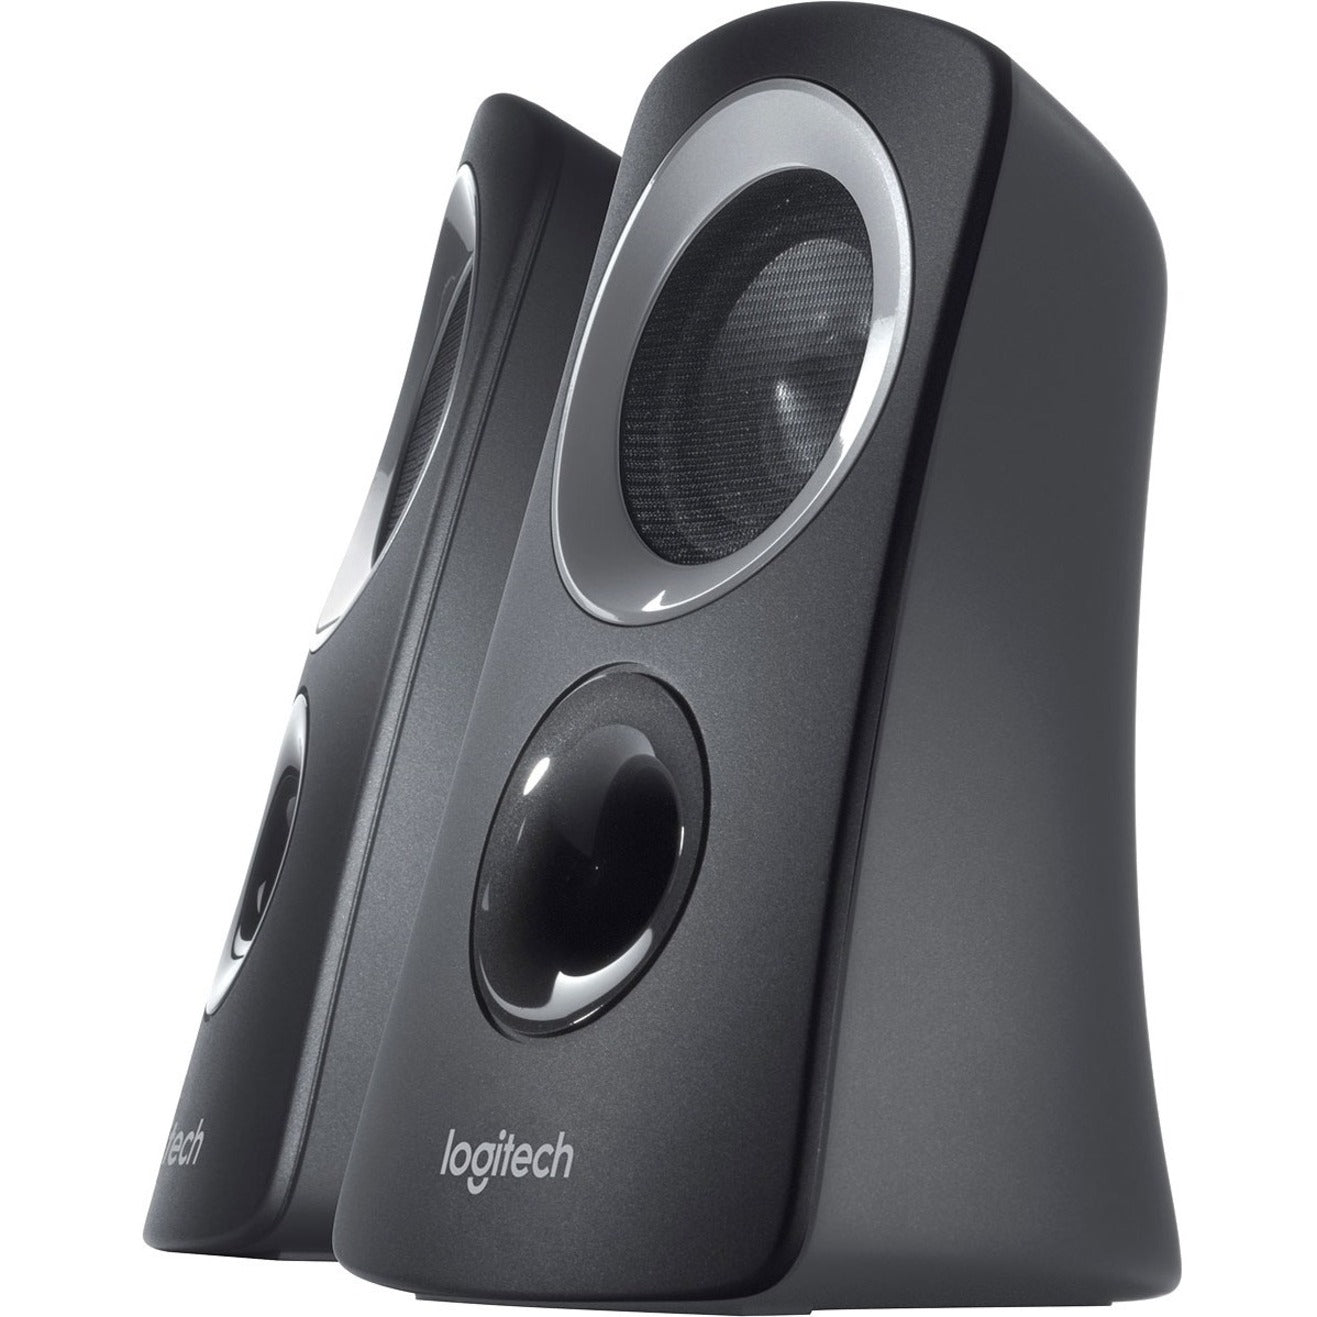 Logitech 980-000382 Z313 Speaker System, 2.1, 25W RMS, Deep Bass, Crystal Clear Clarity